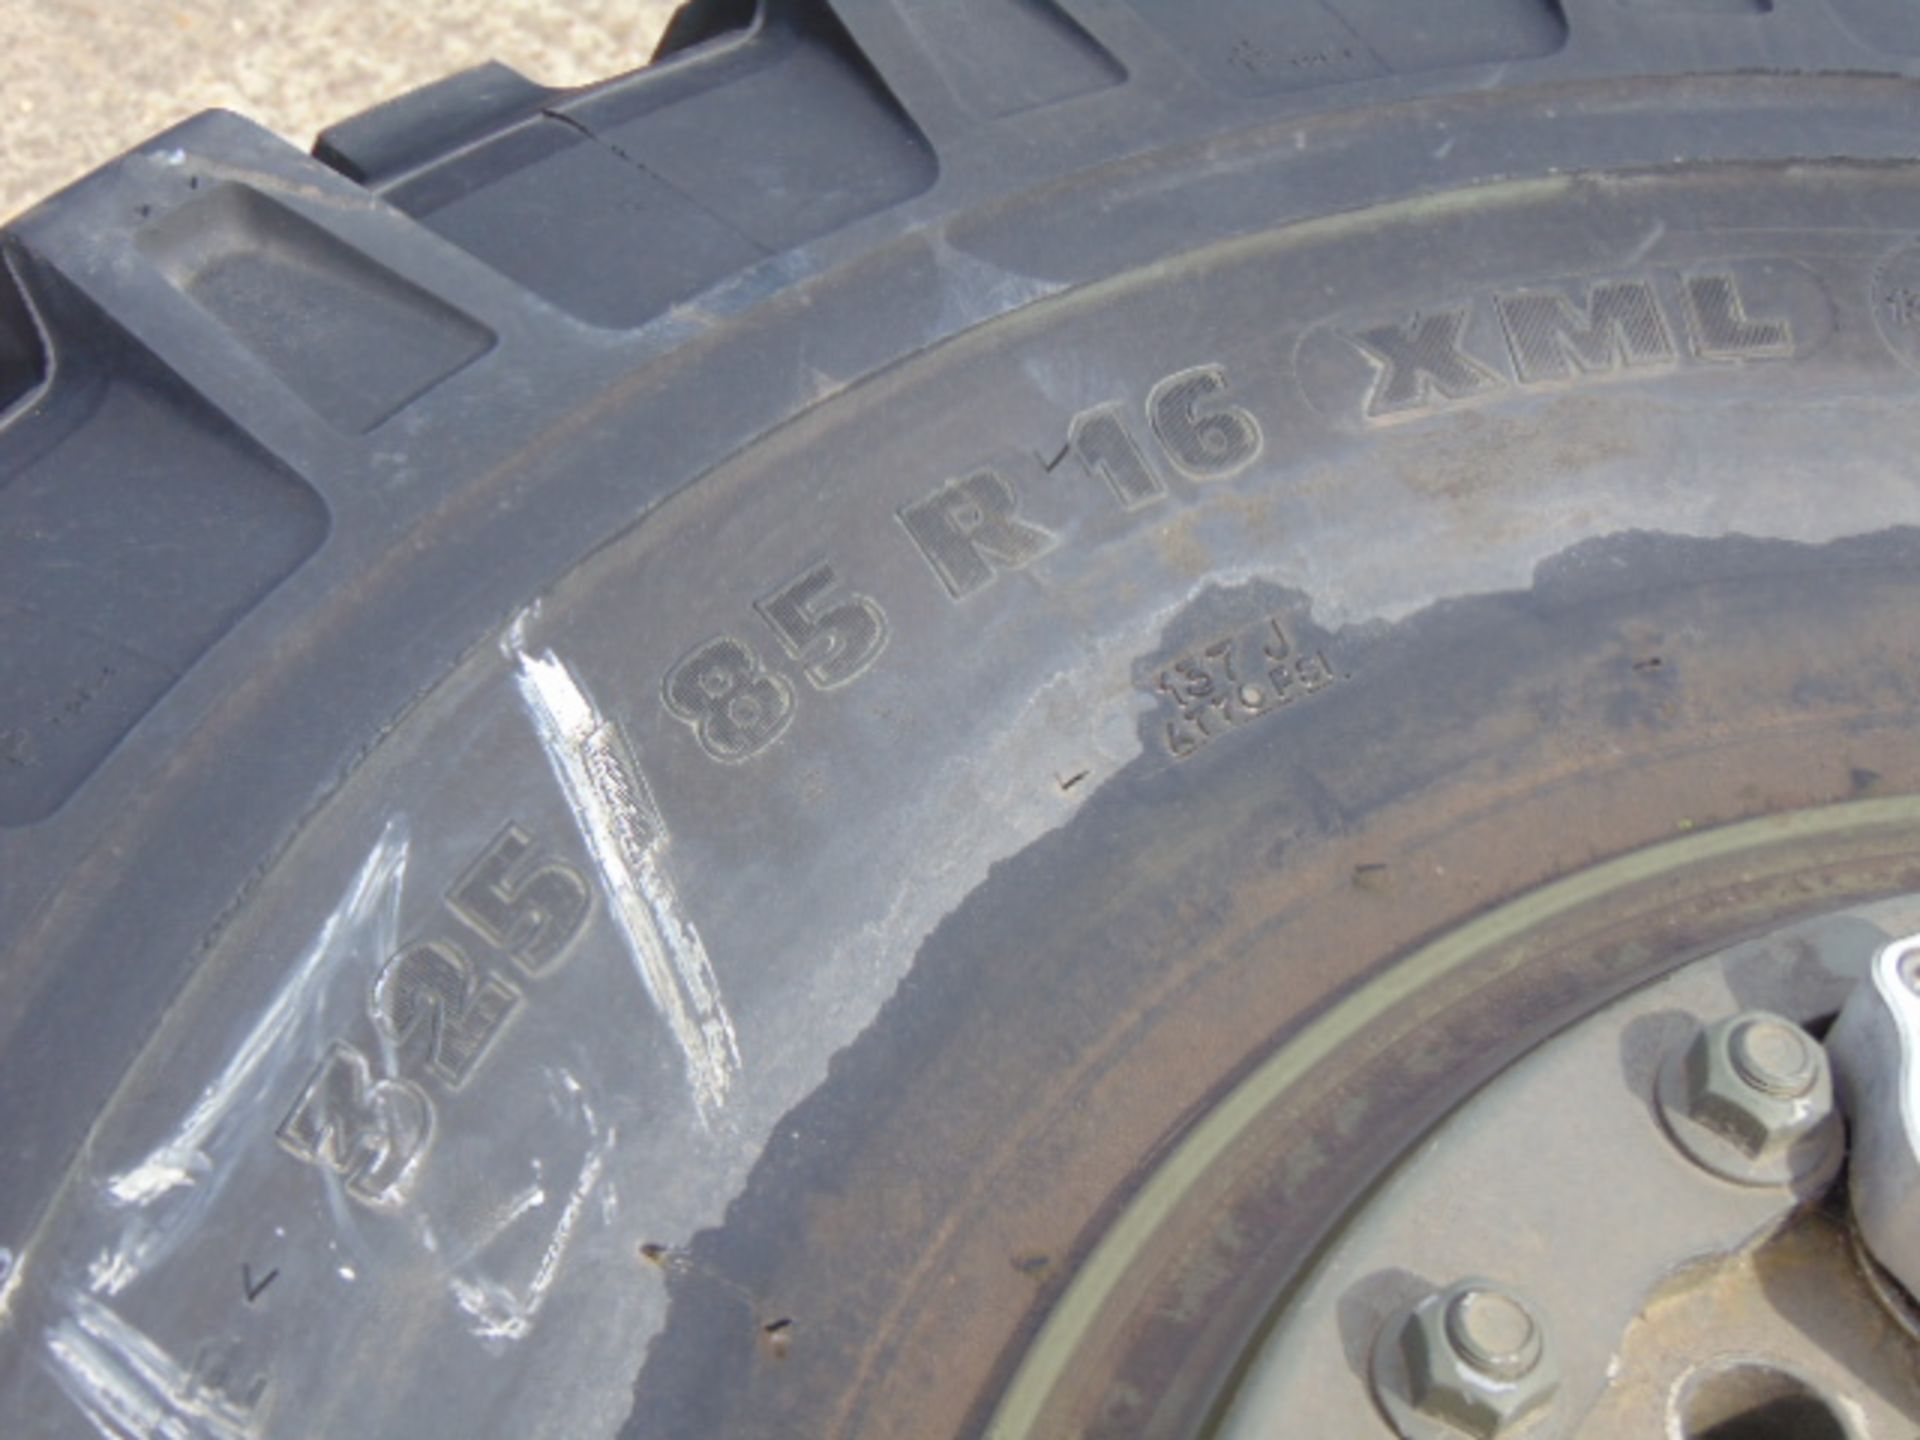 2 x Michelin 325/85 R16 XML Tyres on 8 stud Rims - Image 6 of 6